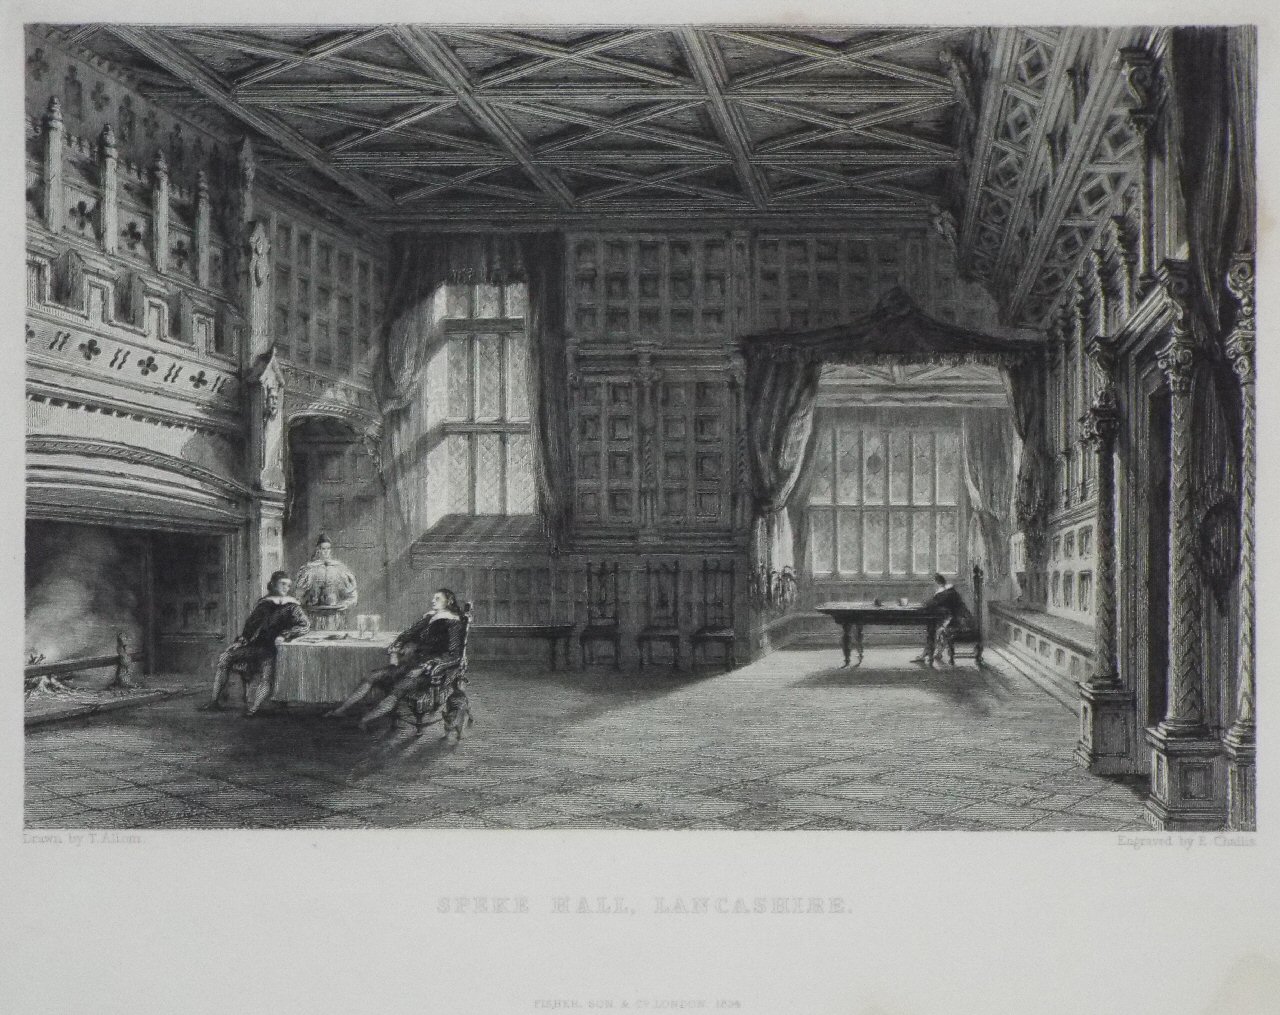 Print - Speke-Hall, Lancashire - Challis